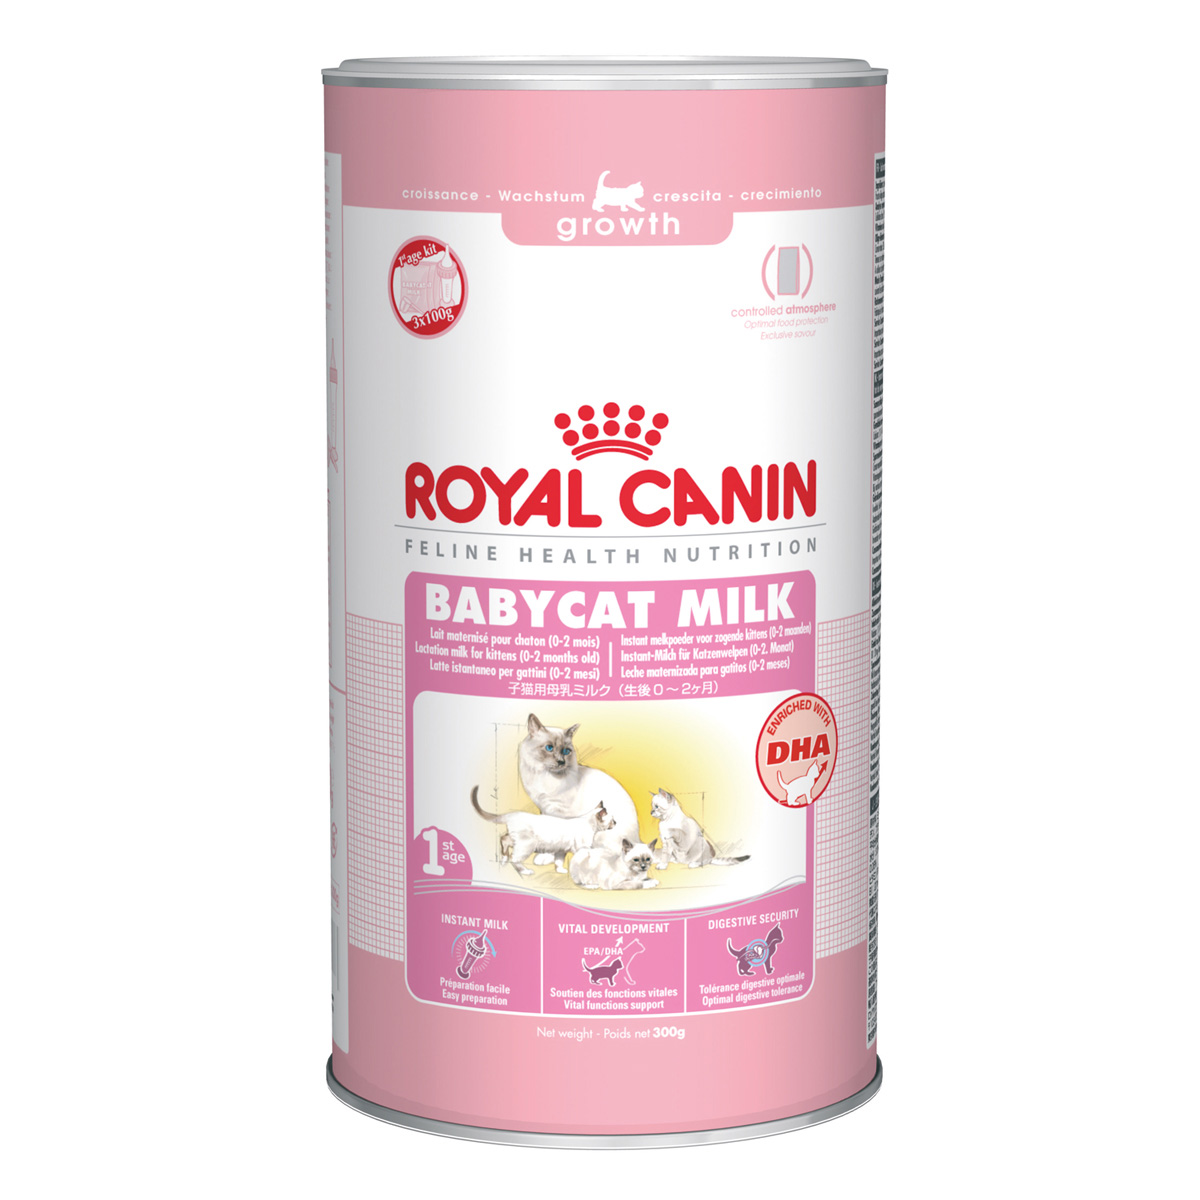 Babycat milk 300g